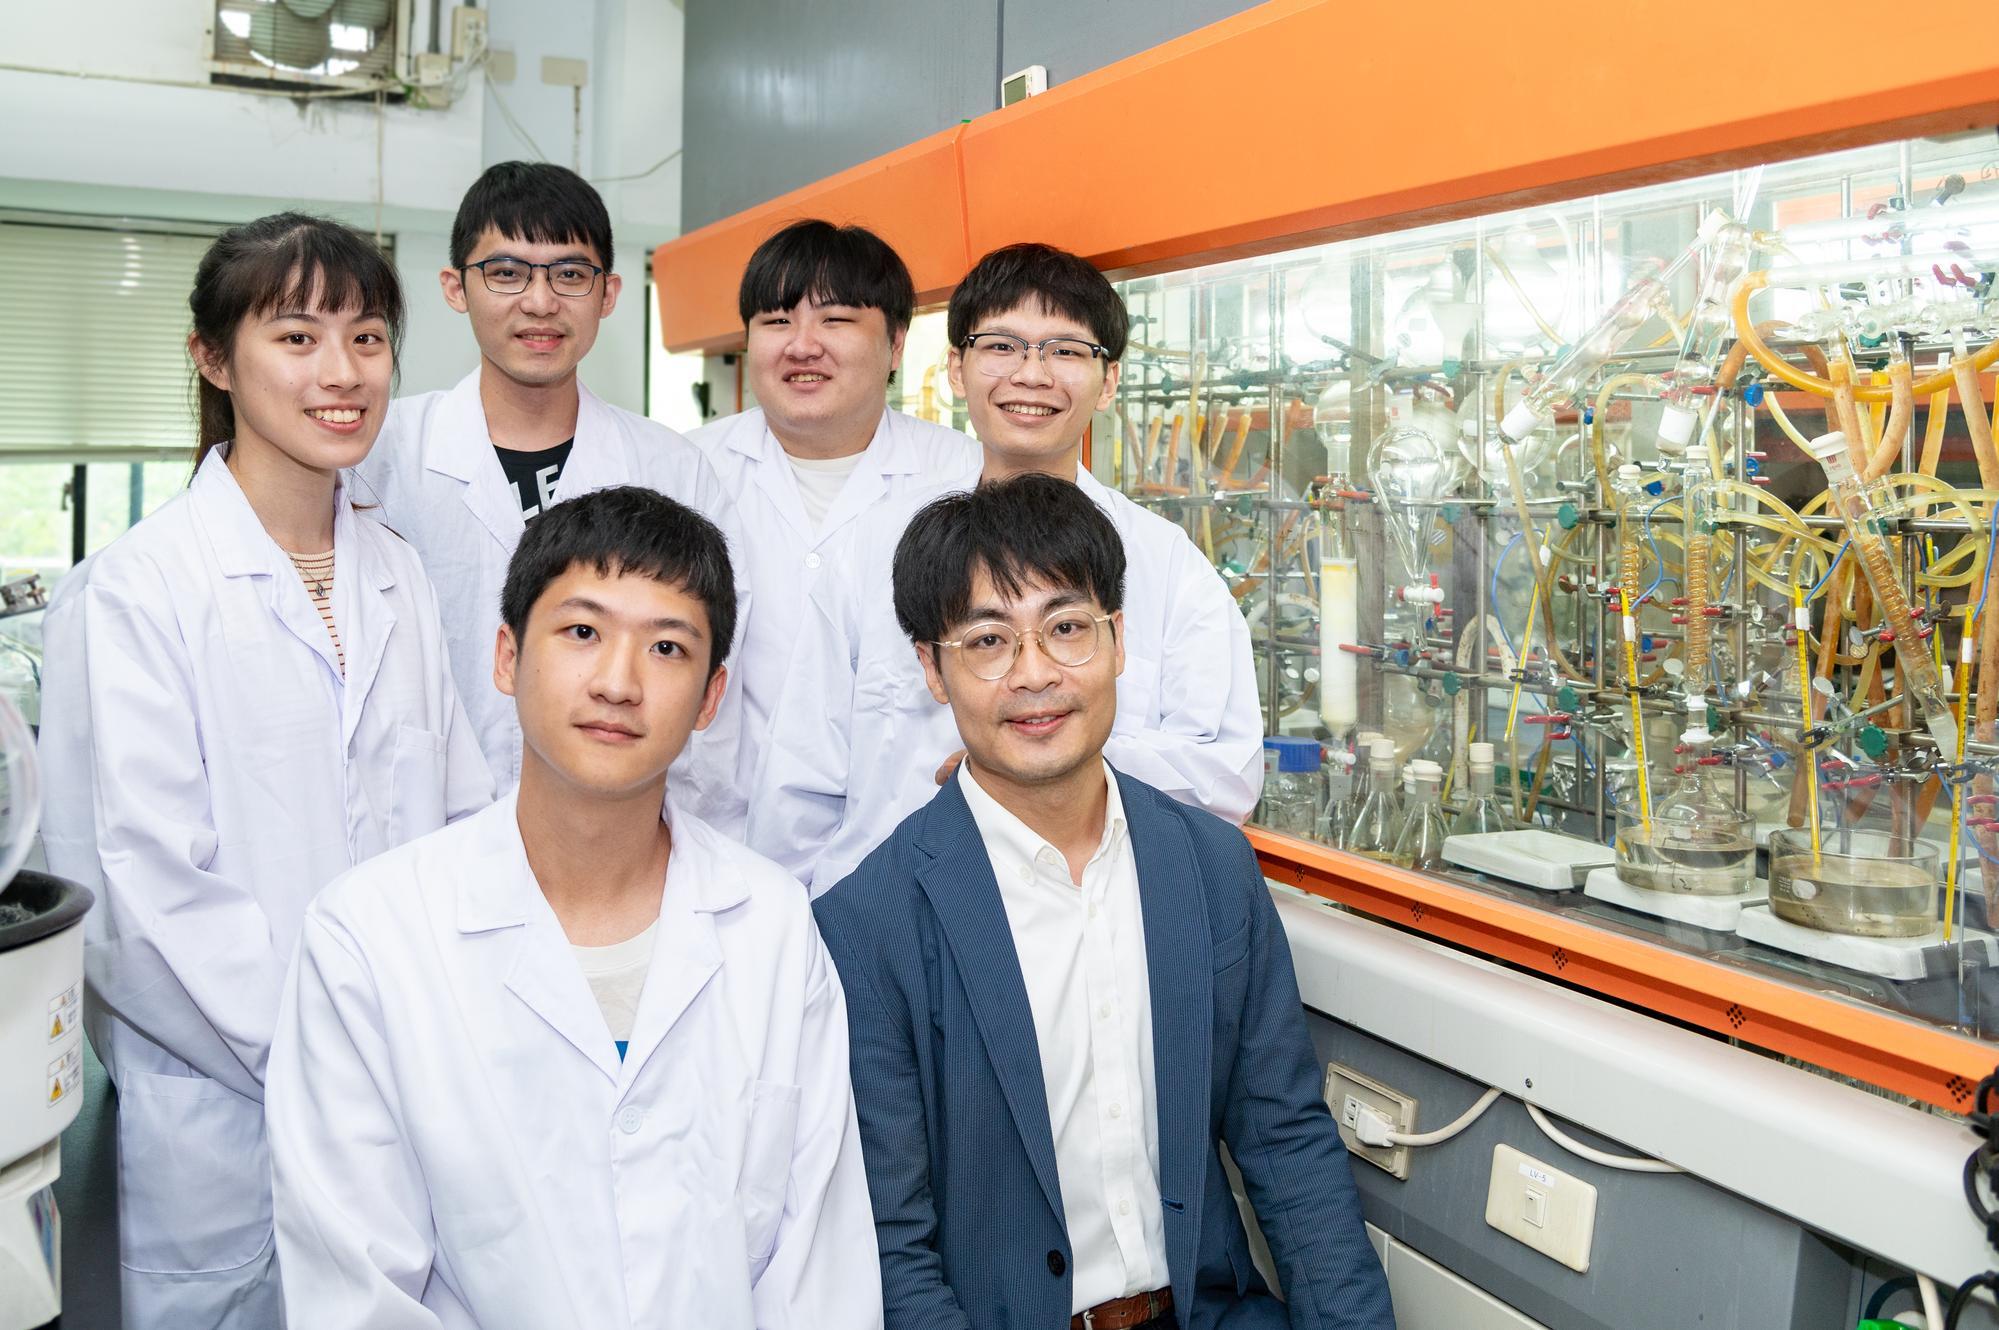 NTHU's seawater hydrogen production research team, led by Prof. Ho-Hsiu Chou (周鶴修) from the Department of Chemical Engineering, includes students Tse-Fu Huang (黃則傅), Ying-Rang Zhuan (莊英讓) (back row, right), Bing-Heng Li (黎秉衡), Wei-Cheng Lin (林韋澄), and Yu-En Sun (孫語恩).